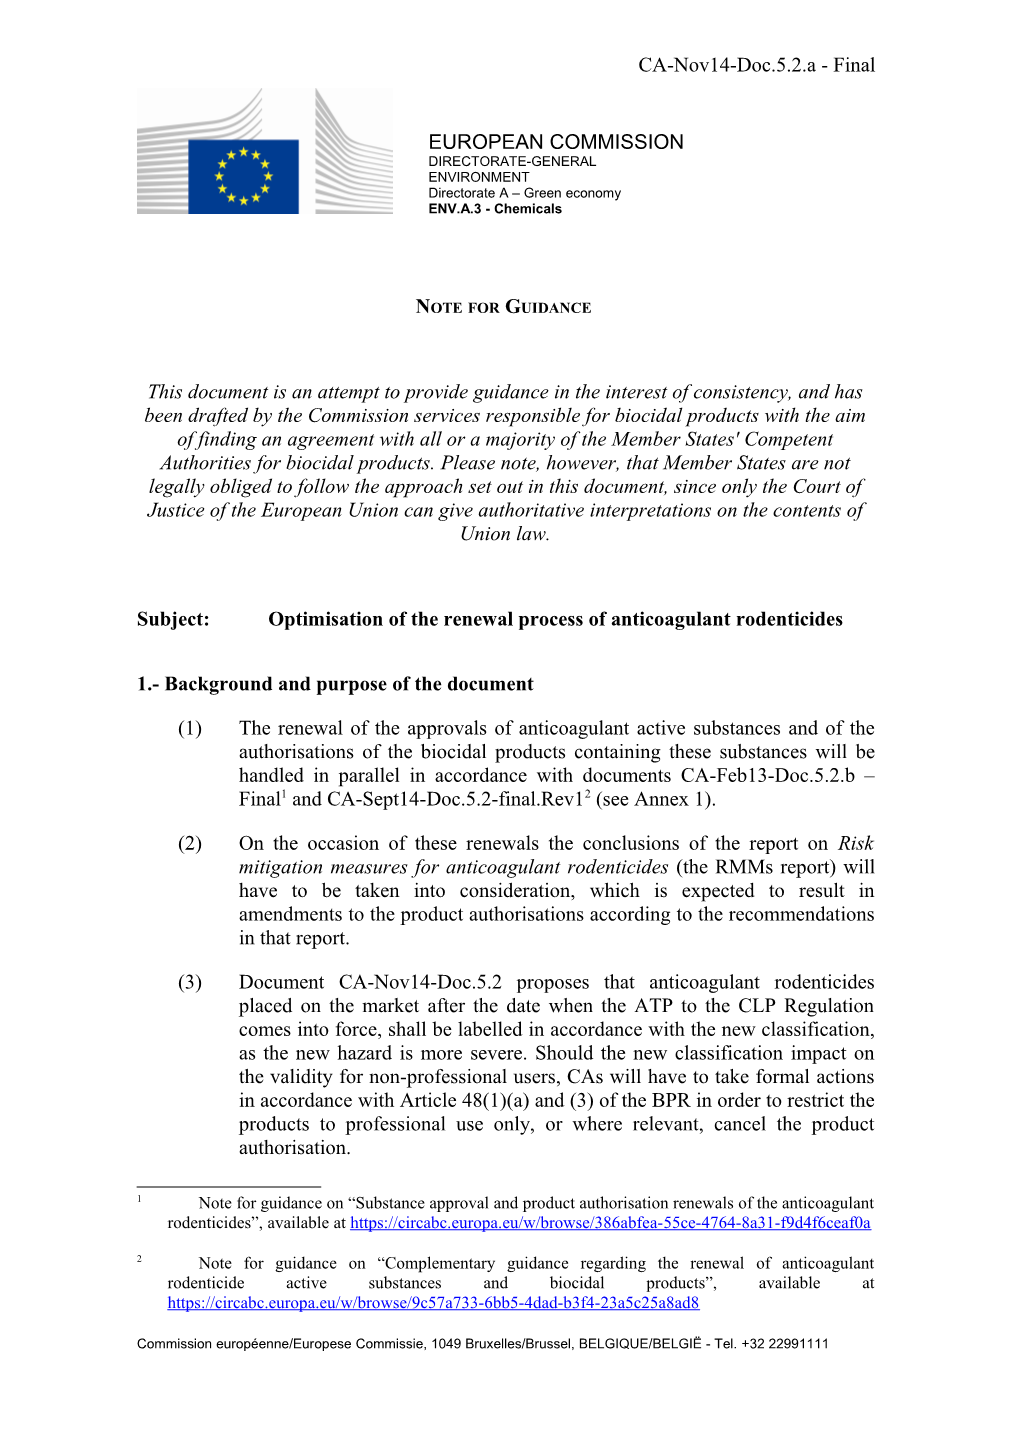 Subject:Optimisation of the Renewal Process of Anticoagulant Rodenticides